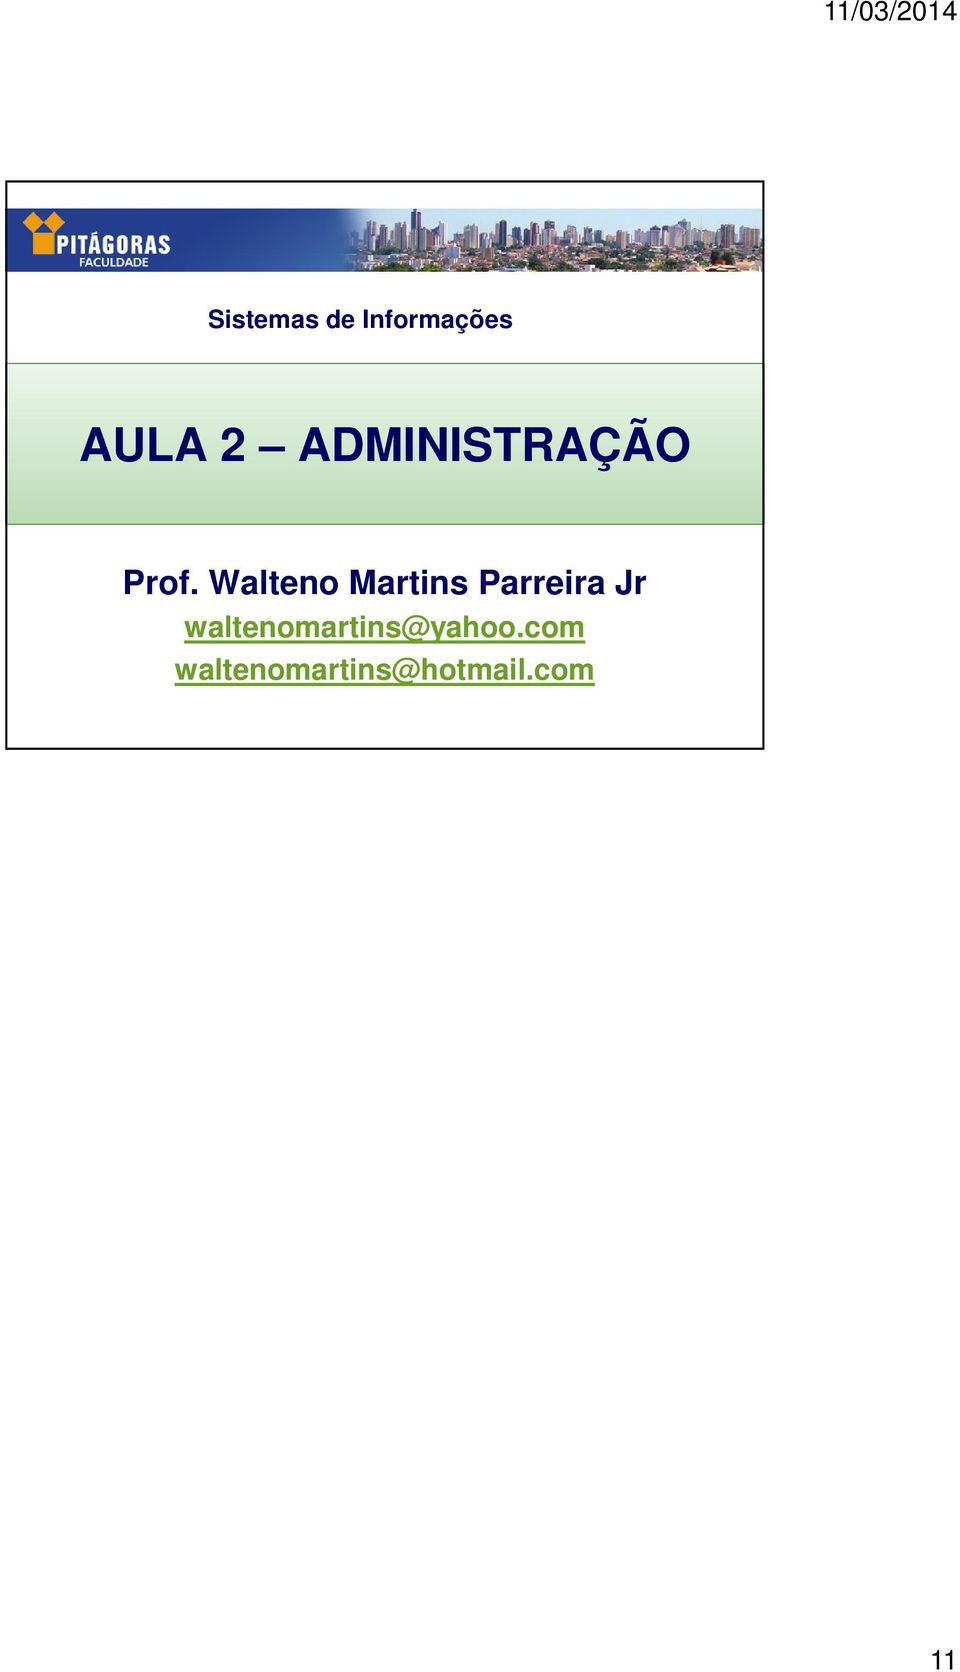 Walteno Martins Parreira Jr